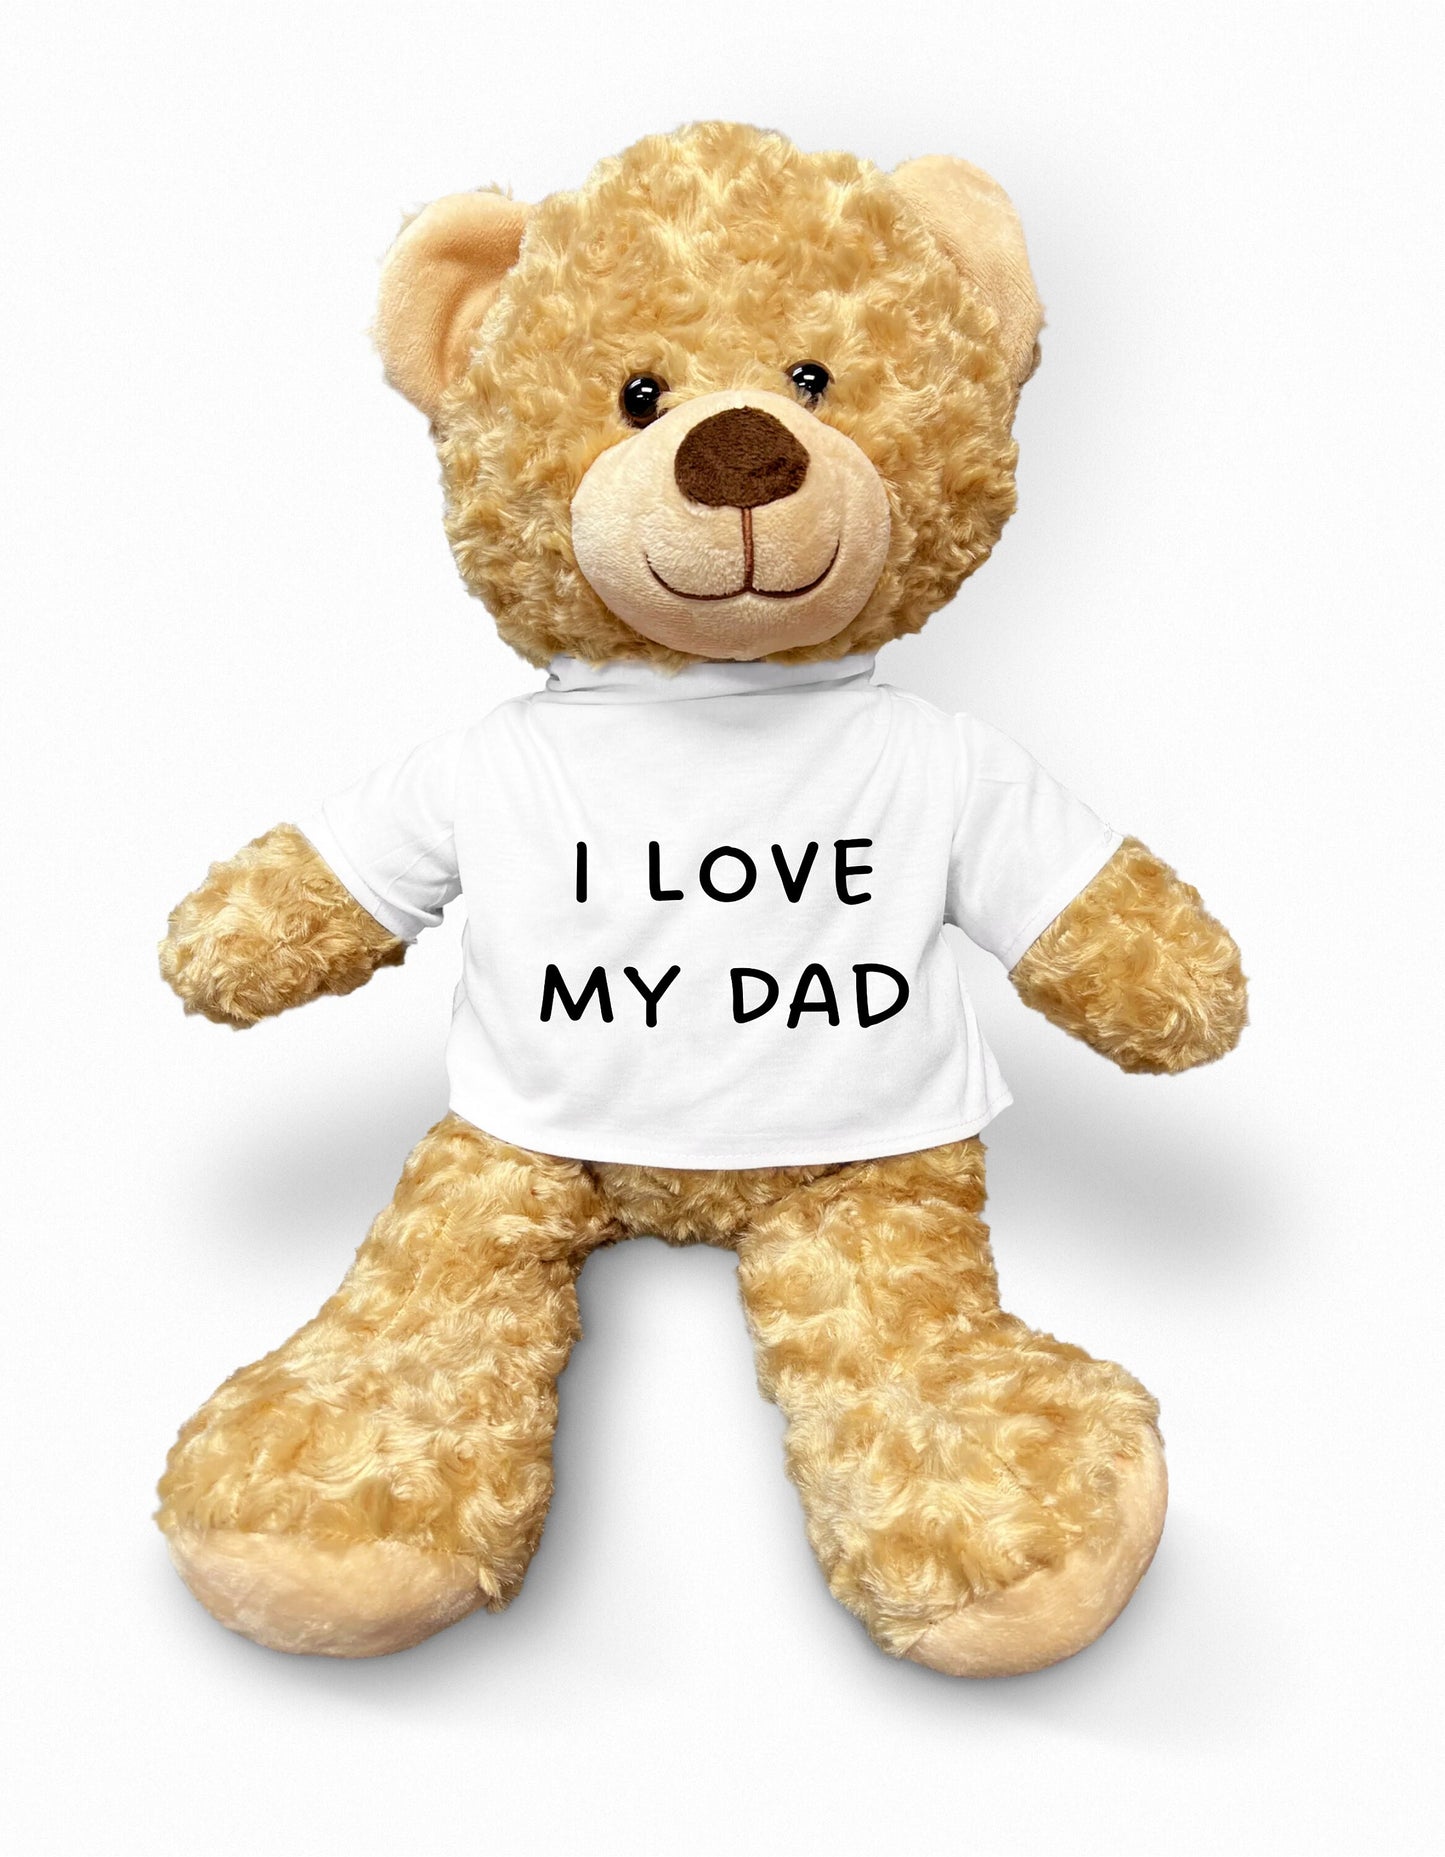 Teddy Bear For Dad From Child, Teddy Bear Set, Father's Day Gift Ideas, Custom Teddy Bear, Gift for Dad, Gift For Bonus Dad, Dad Gift